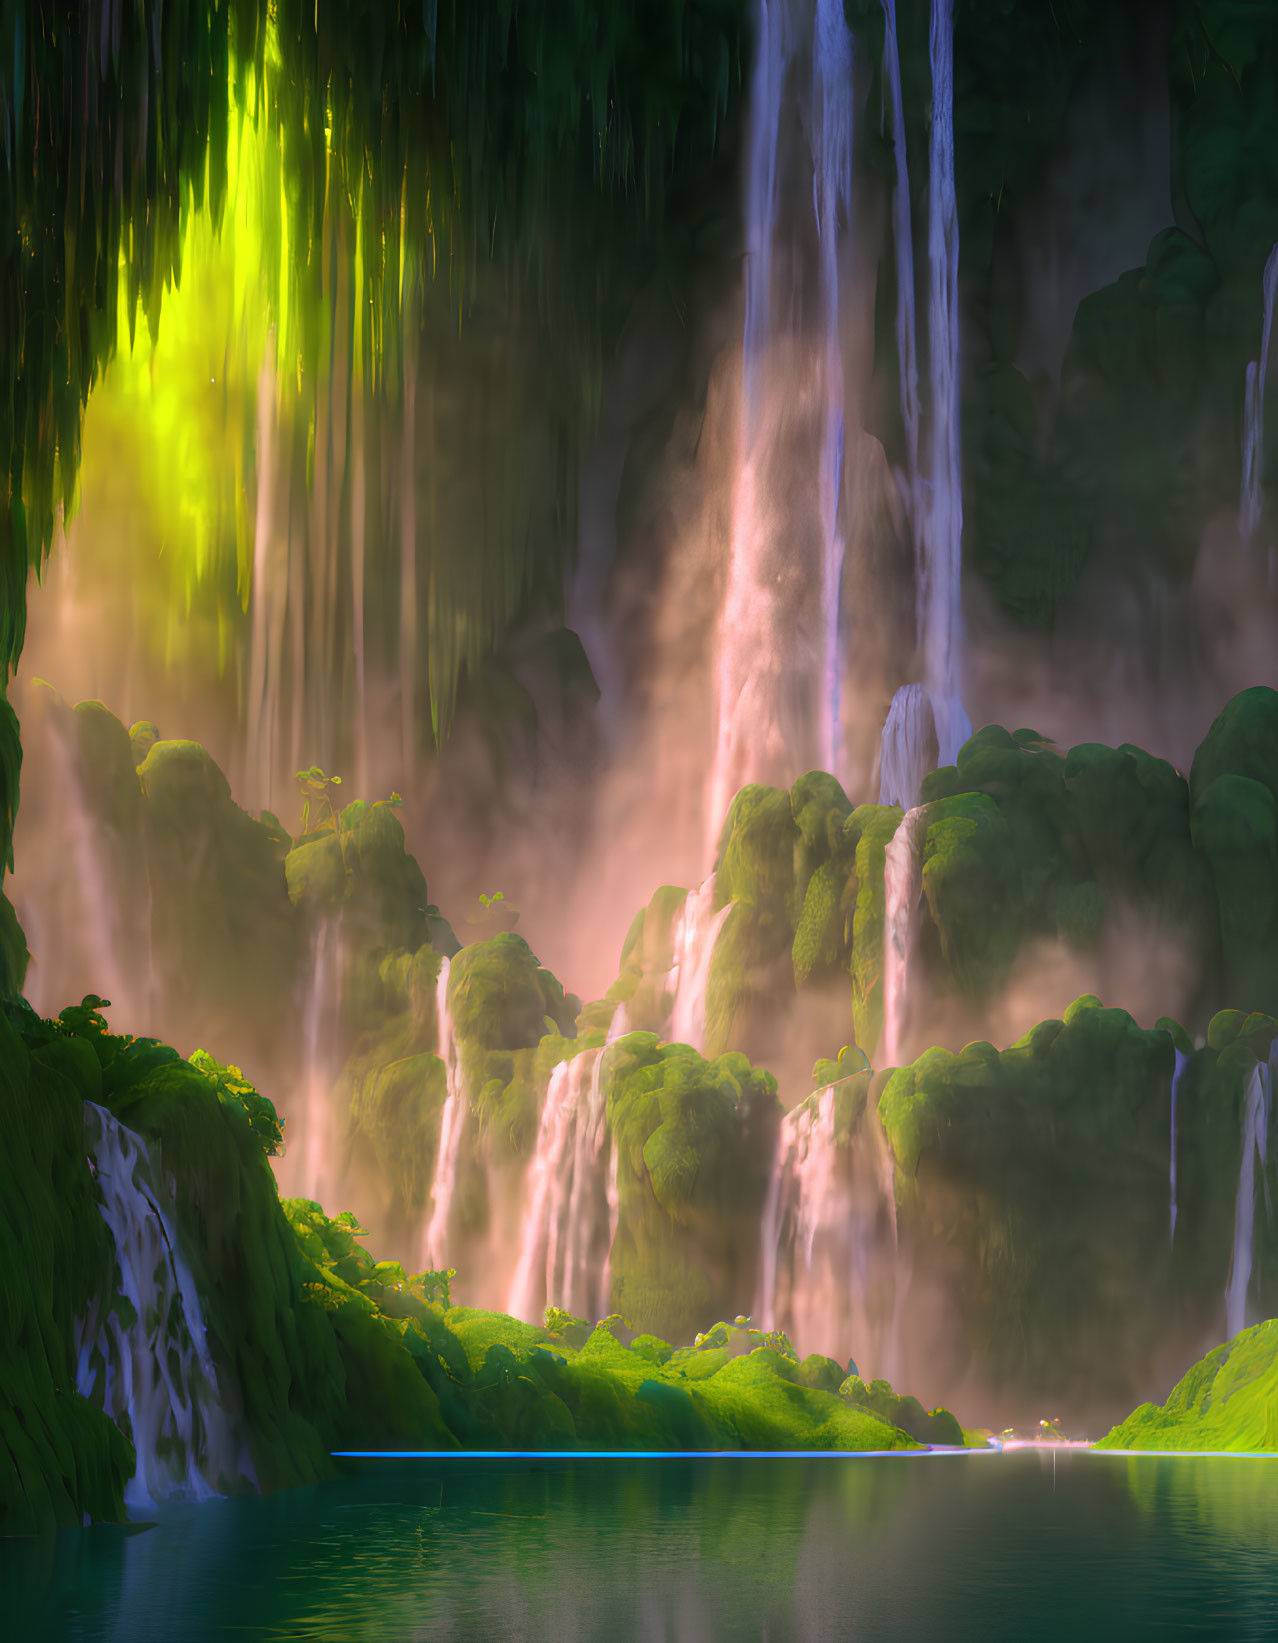 Mystical waterfall scene with vibrant greenery and luminous glow